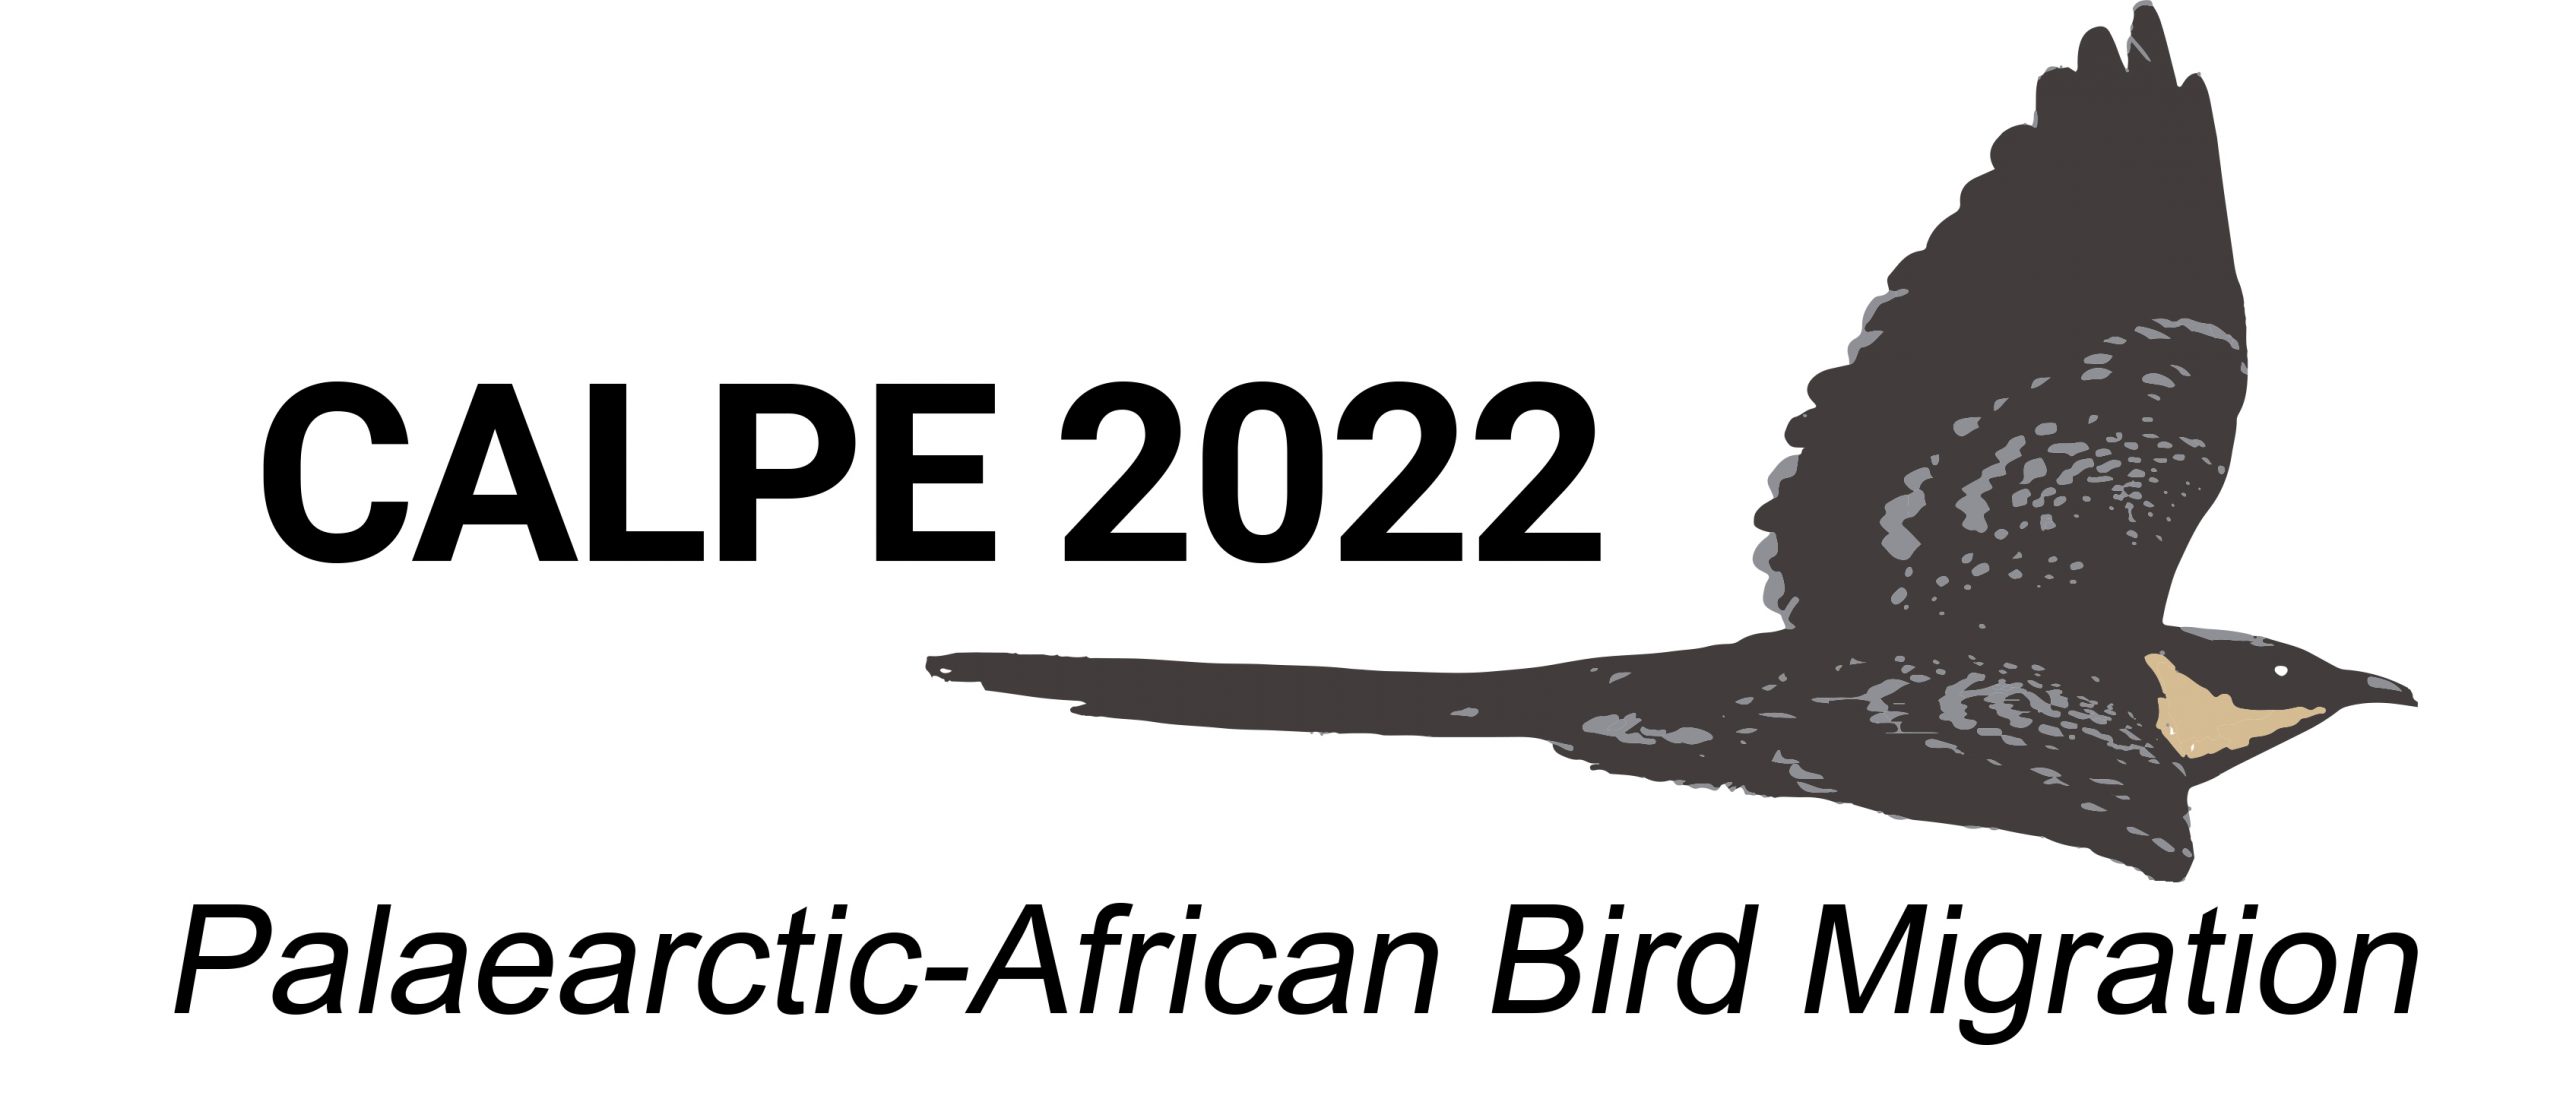 Logo Calpe 2022